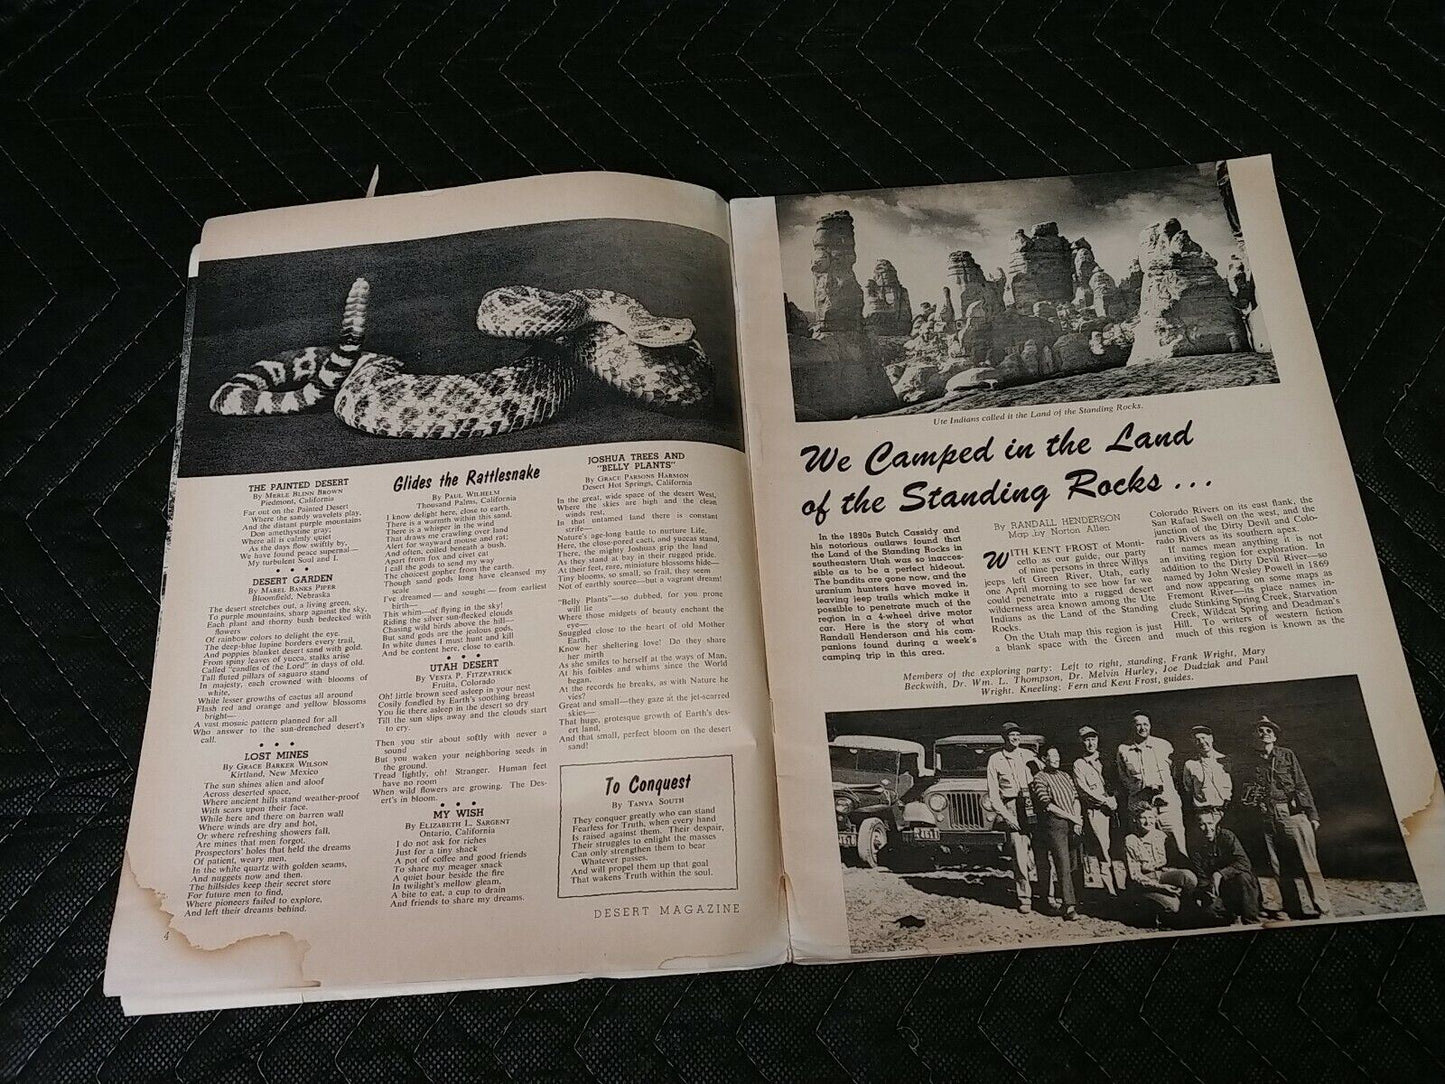 Vintage Desert Magazine October 1957